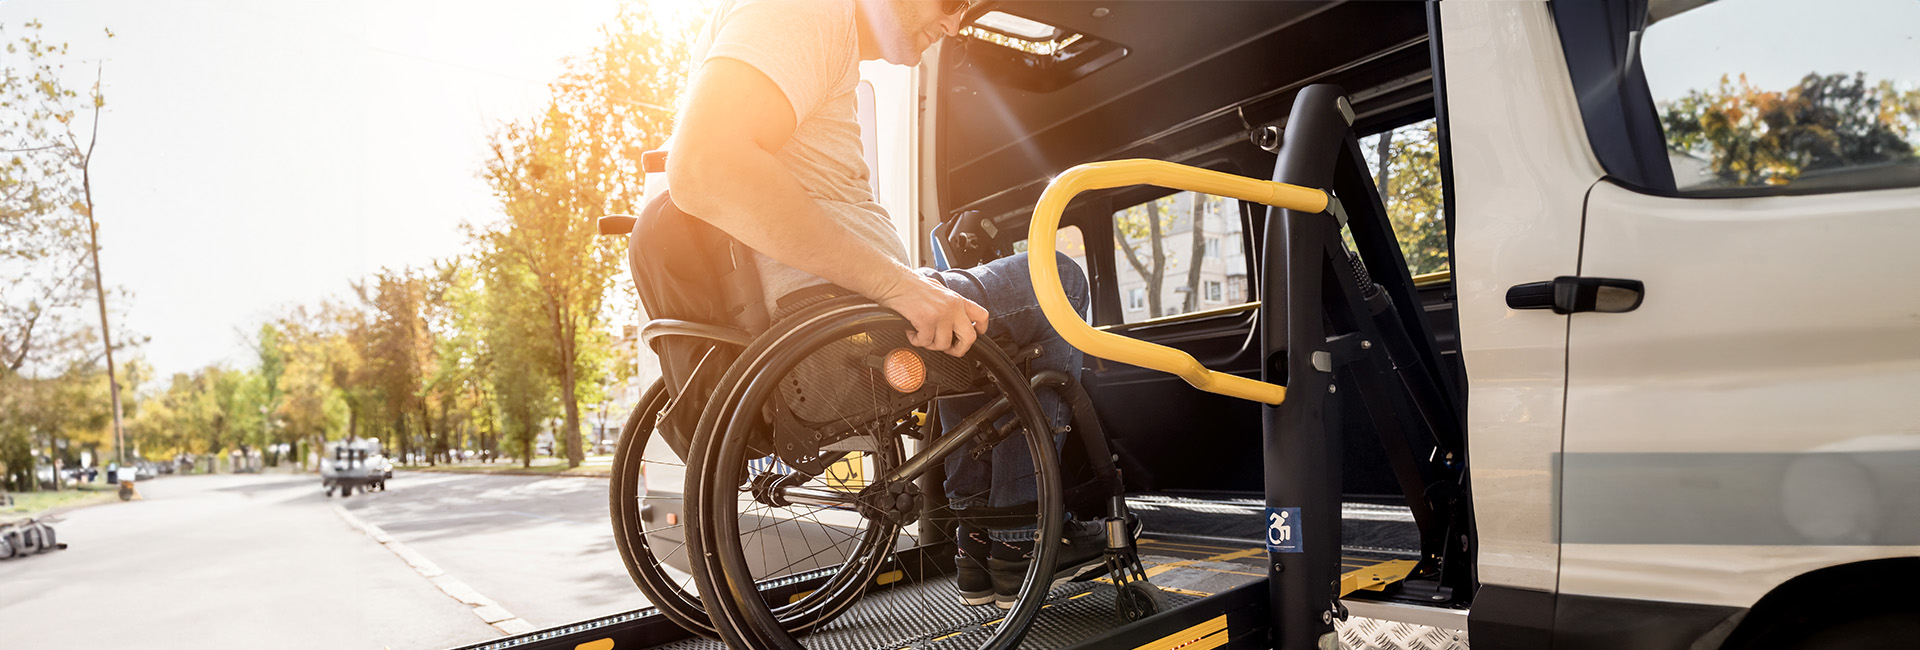 Soziale Reha: Rollstuhlfahrer nutzt barrierefreien Transport